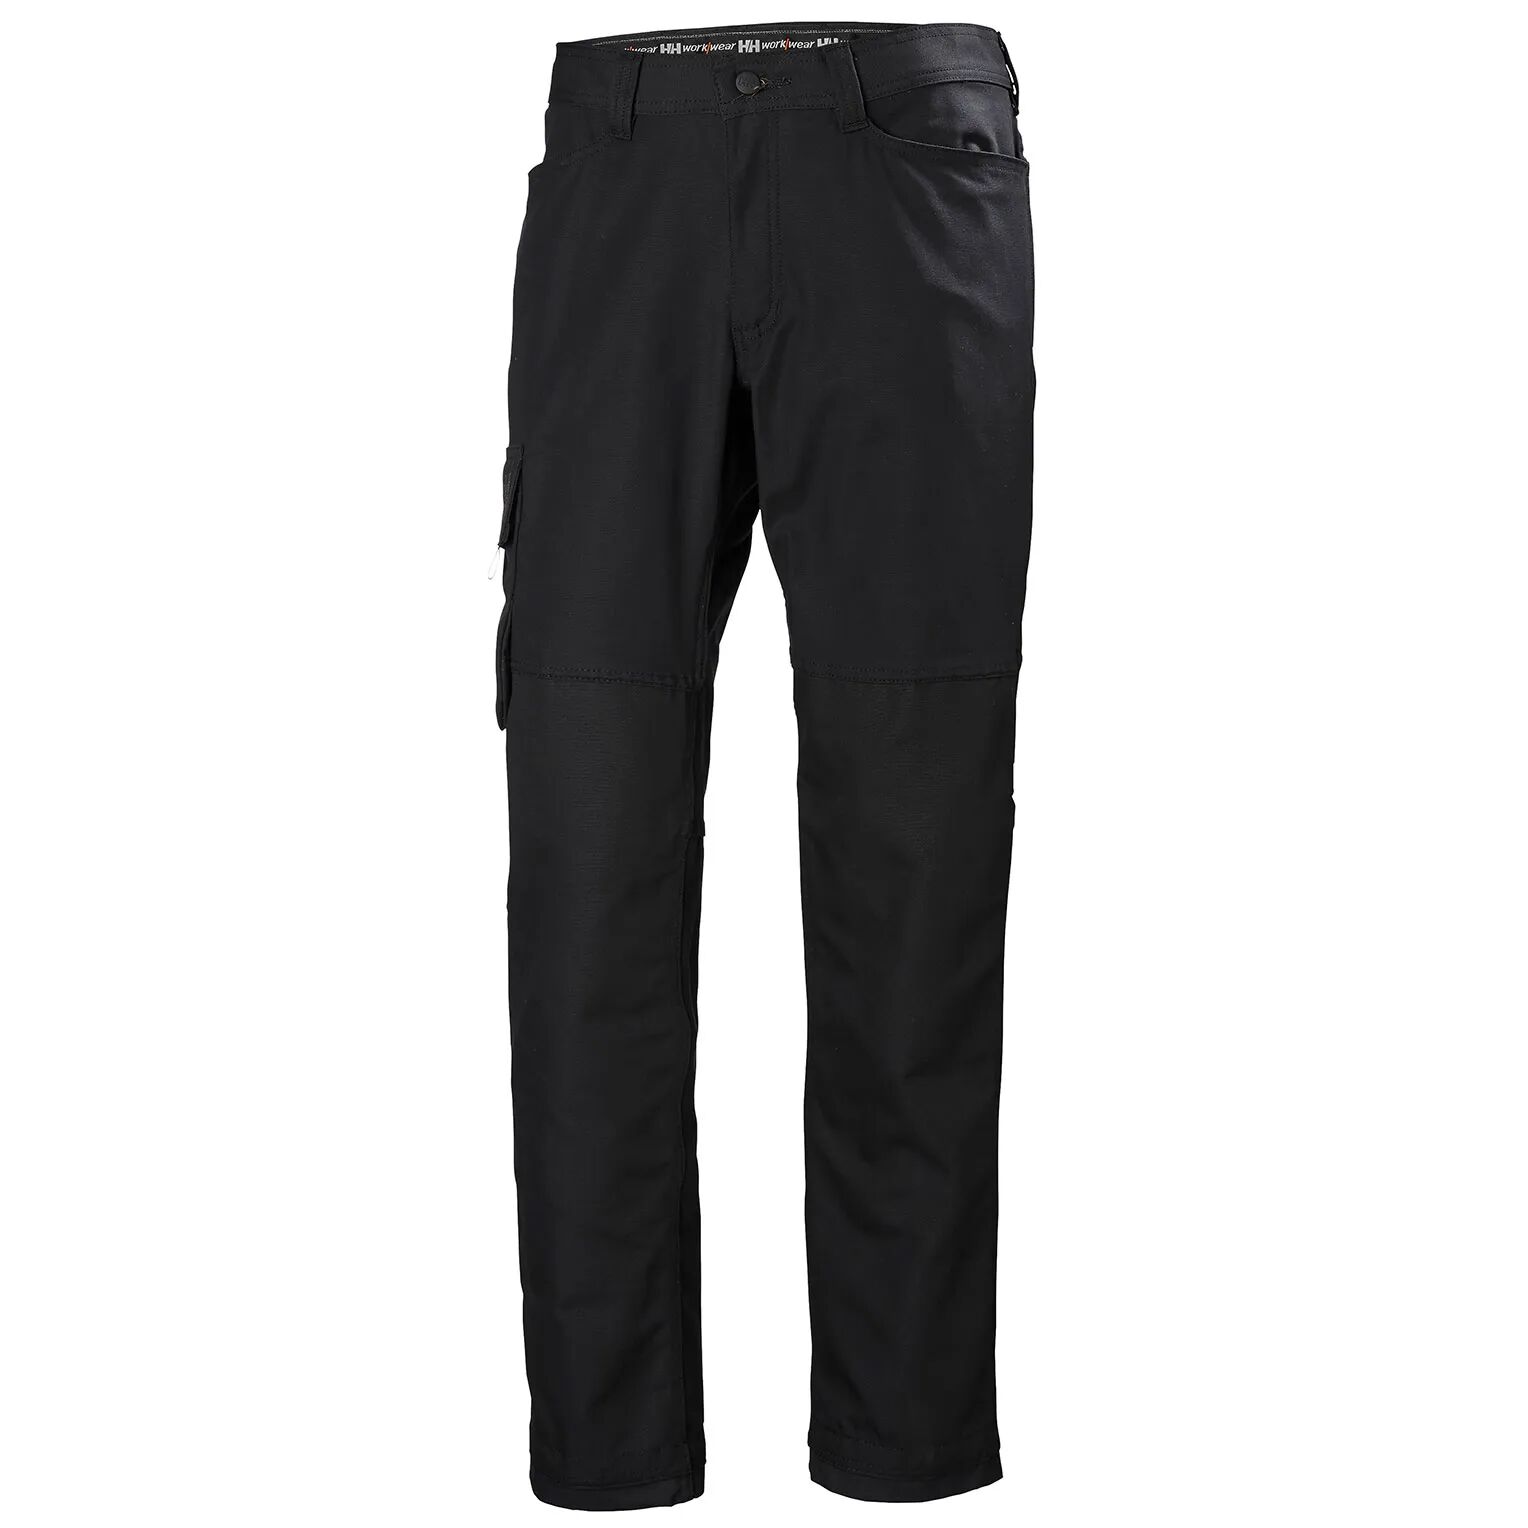 HH Workwear Helly Hansen WorkwearOxford Service Pant NA Black 34/32